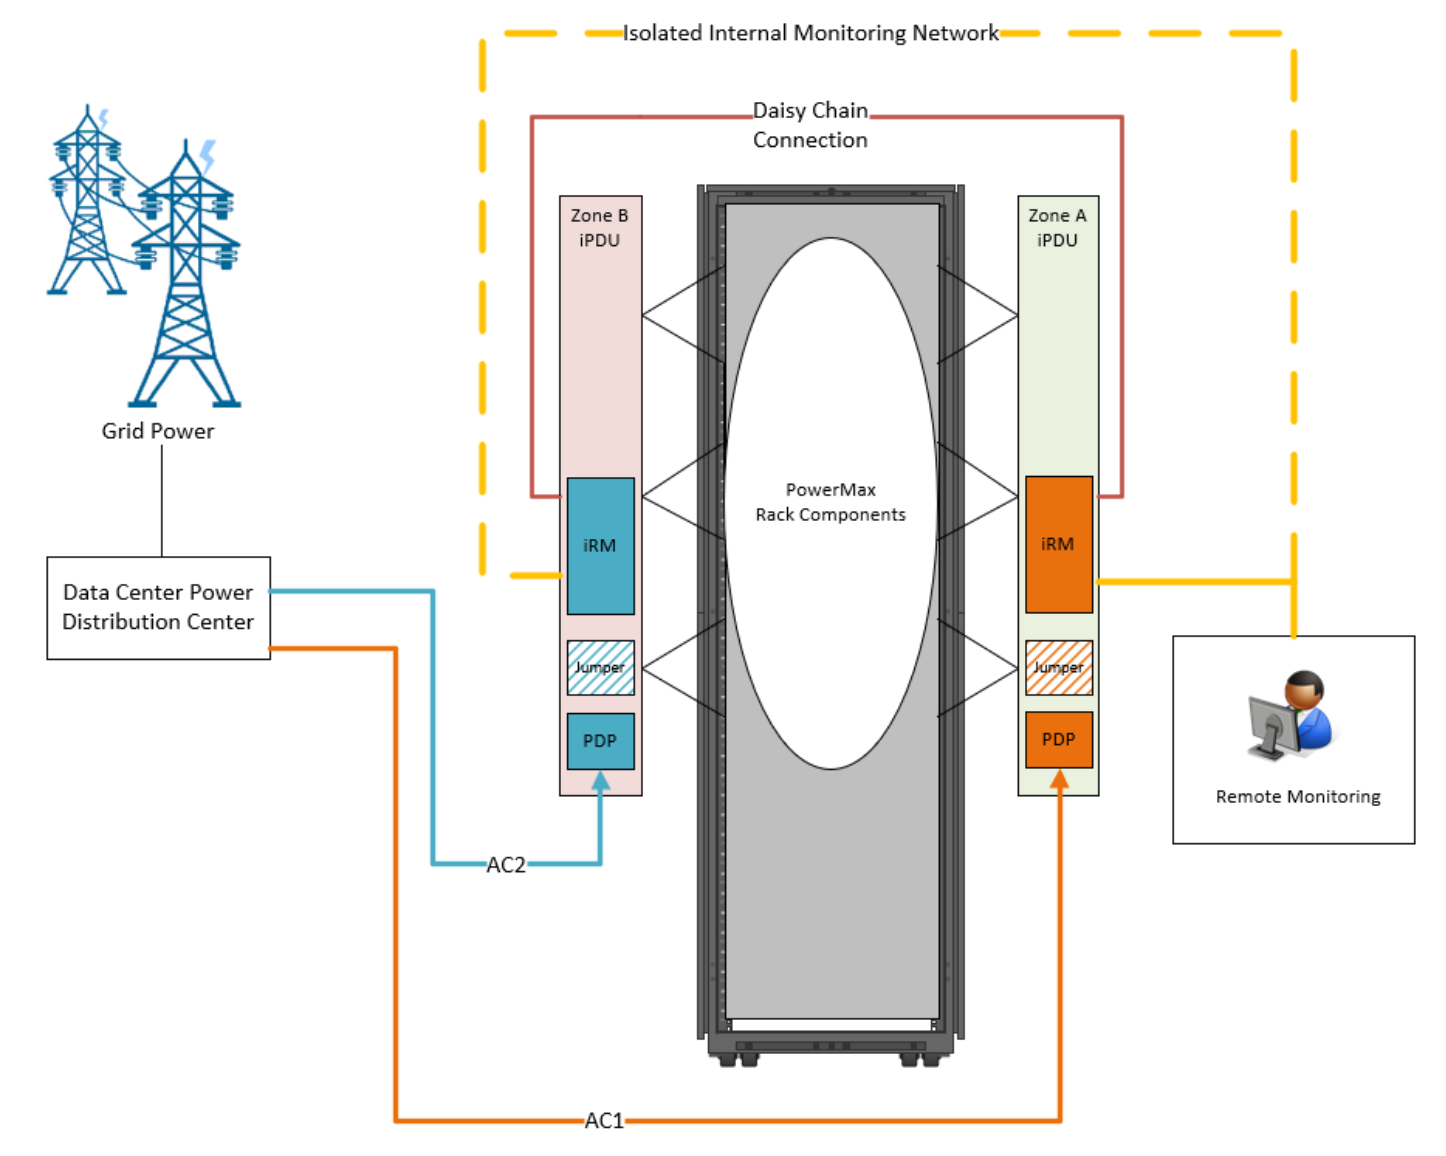 A standard iPDU deployment providing 14.4 kVA to the rack